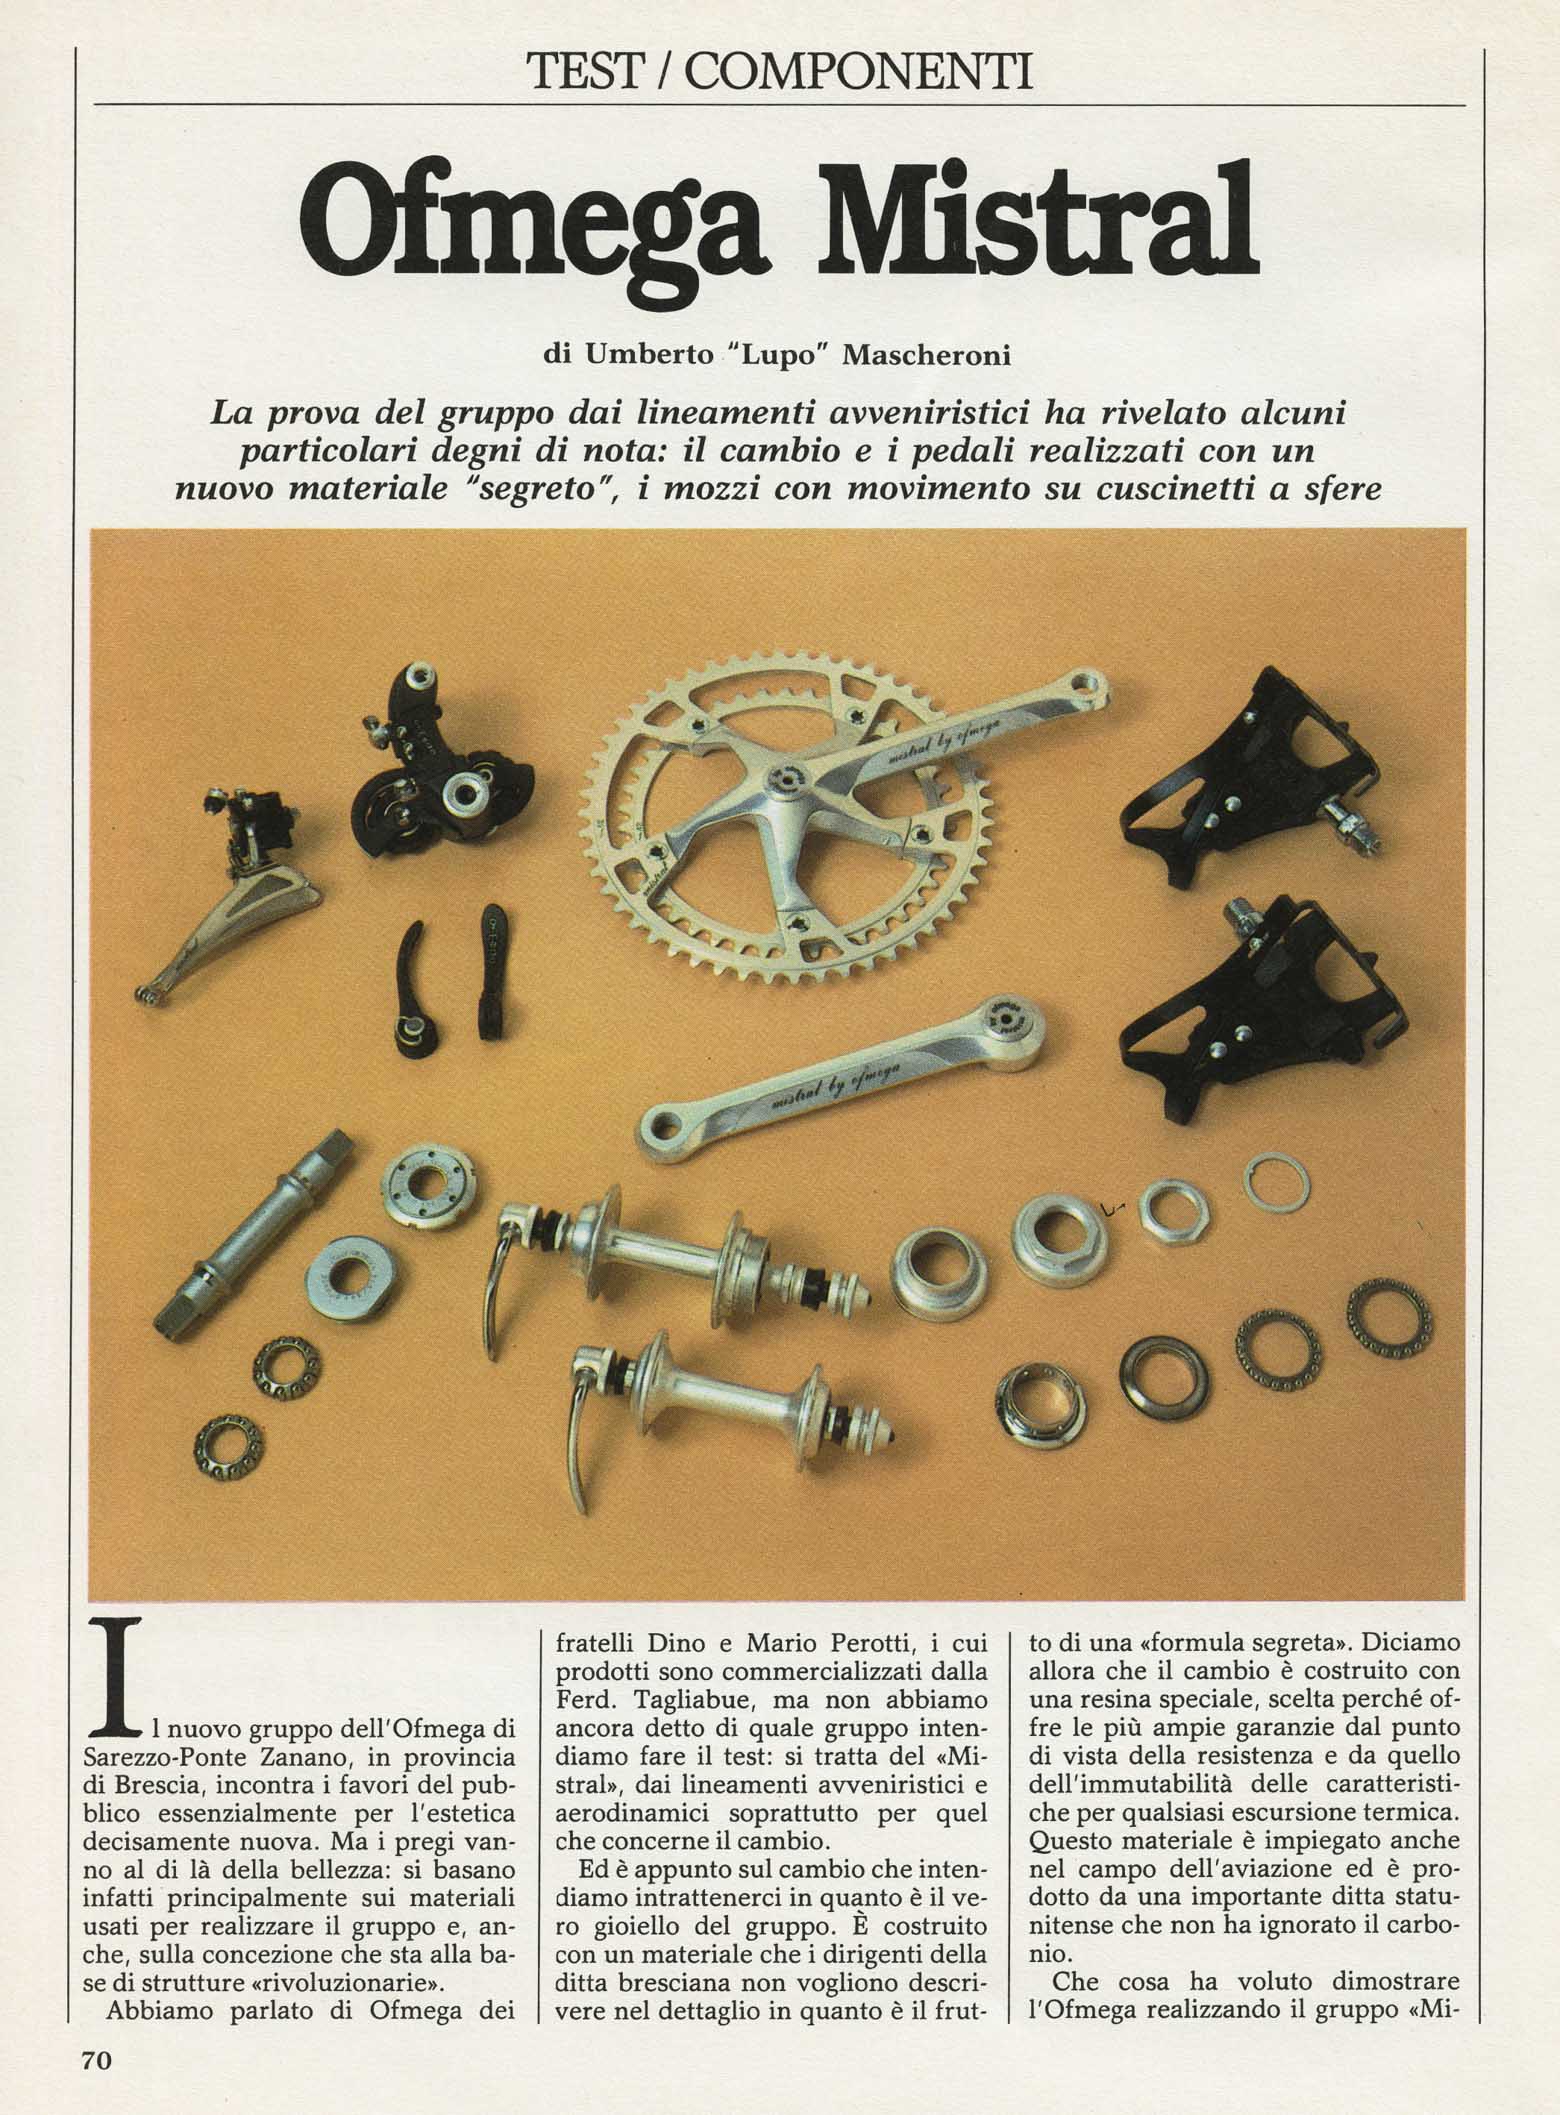 La Bicicletta 1984 May - Ofmega article scan 01 main image